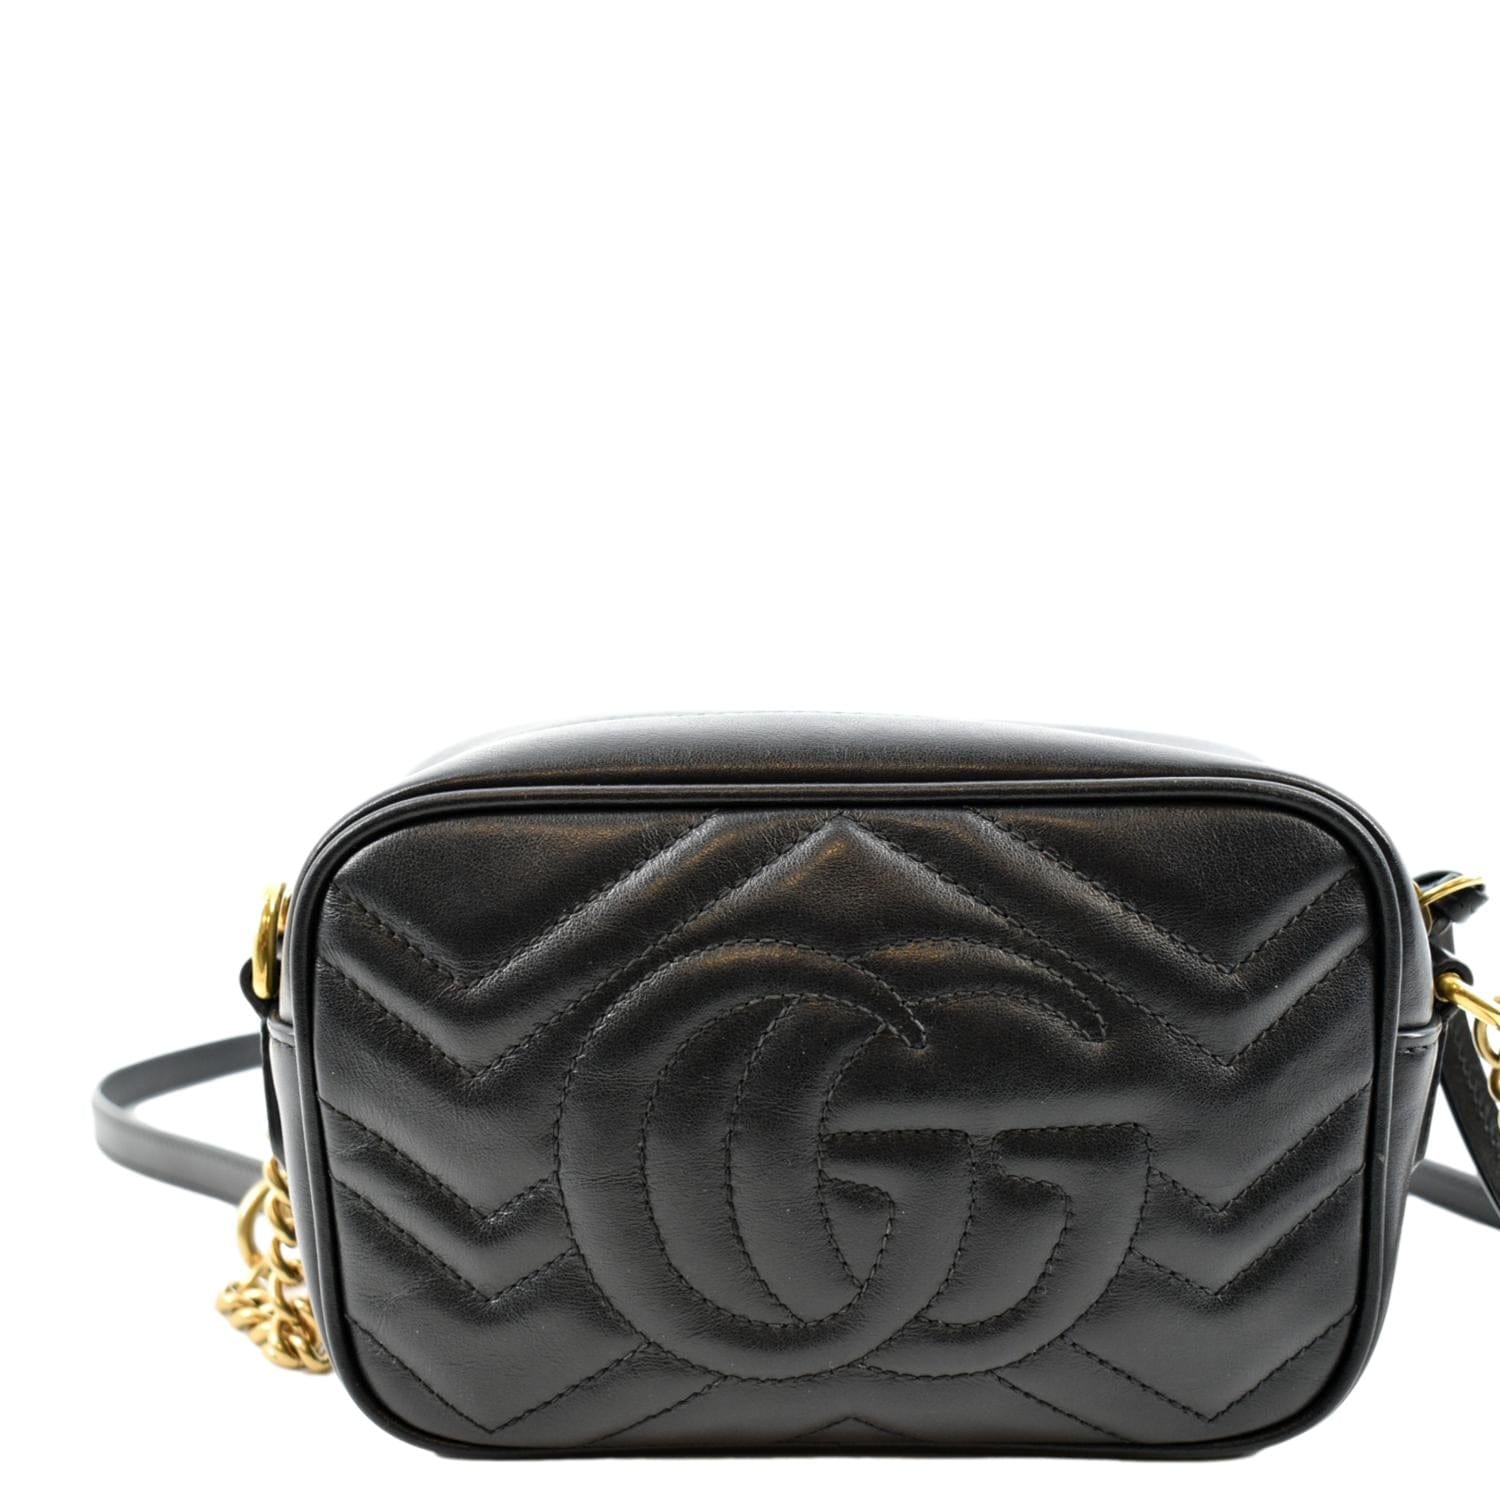 GG-Marmont mini matelassé-leather cross-body bag | Gucci